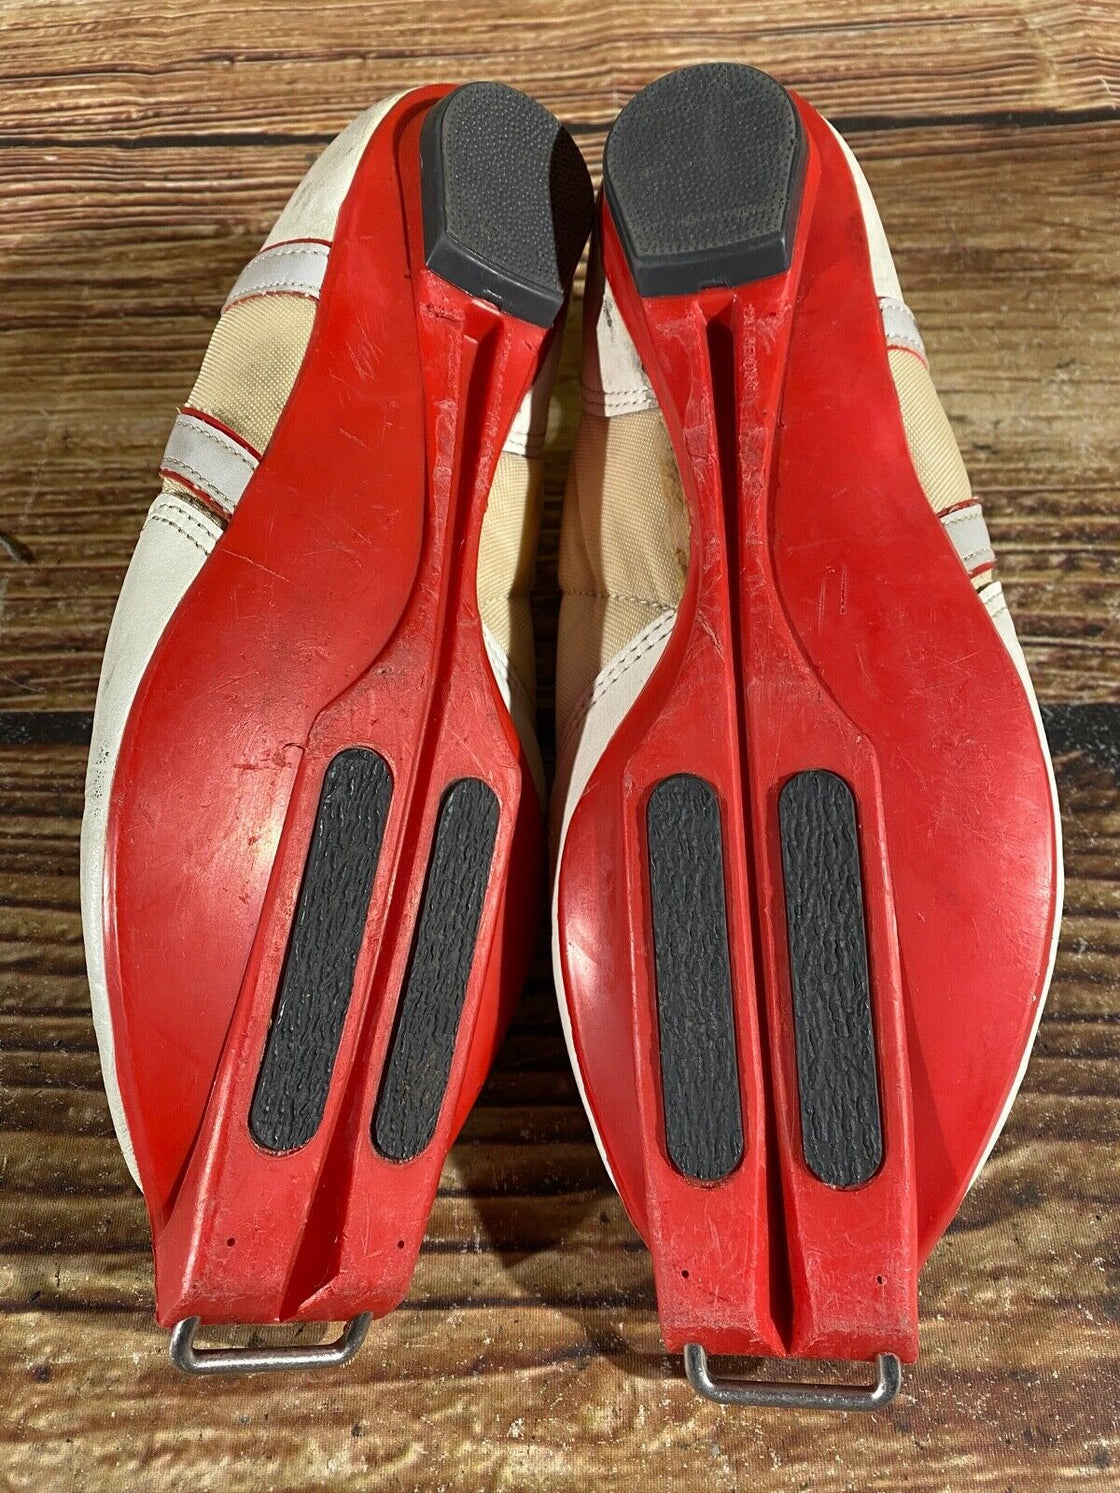 KARHU Vintage Nordic Cross Country Ski Boots Size EU40 US7 for SNS Old Bindings